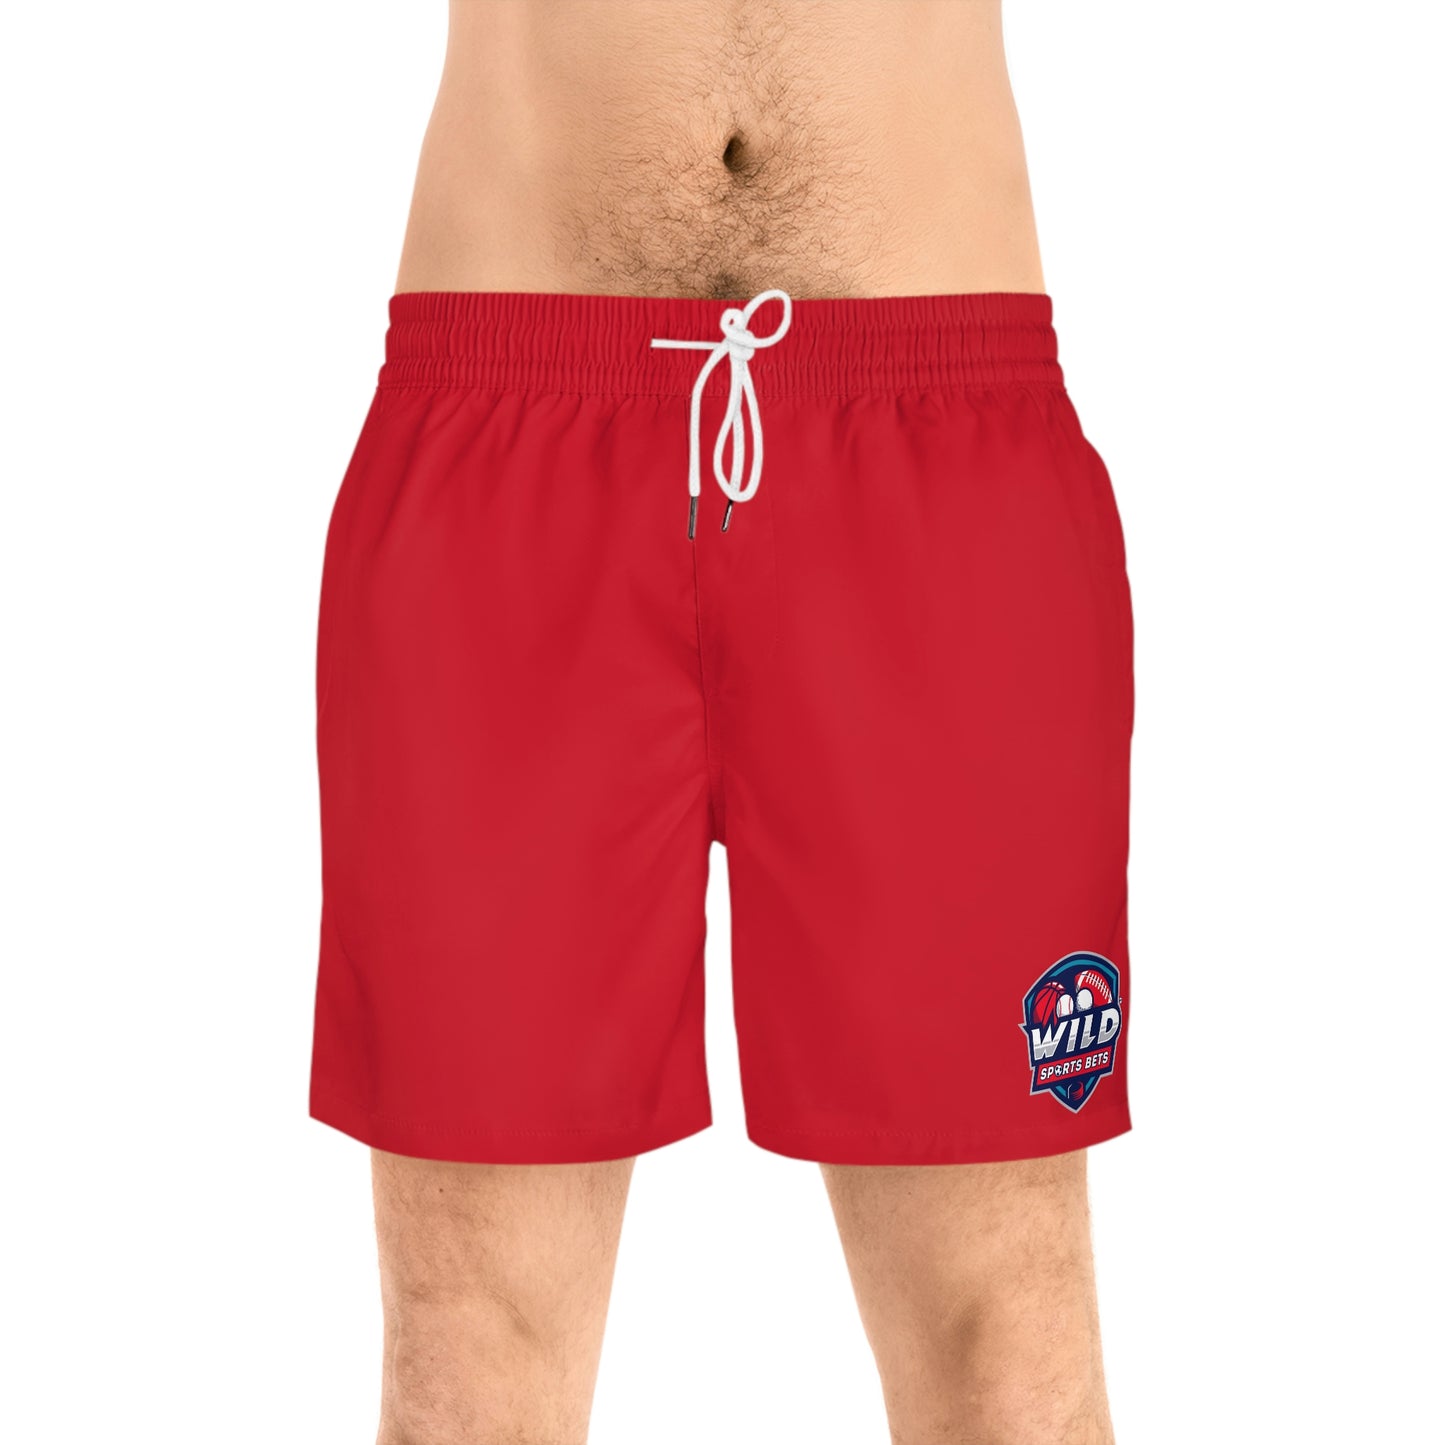 Red Men's WSB Swim Shorts